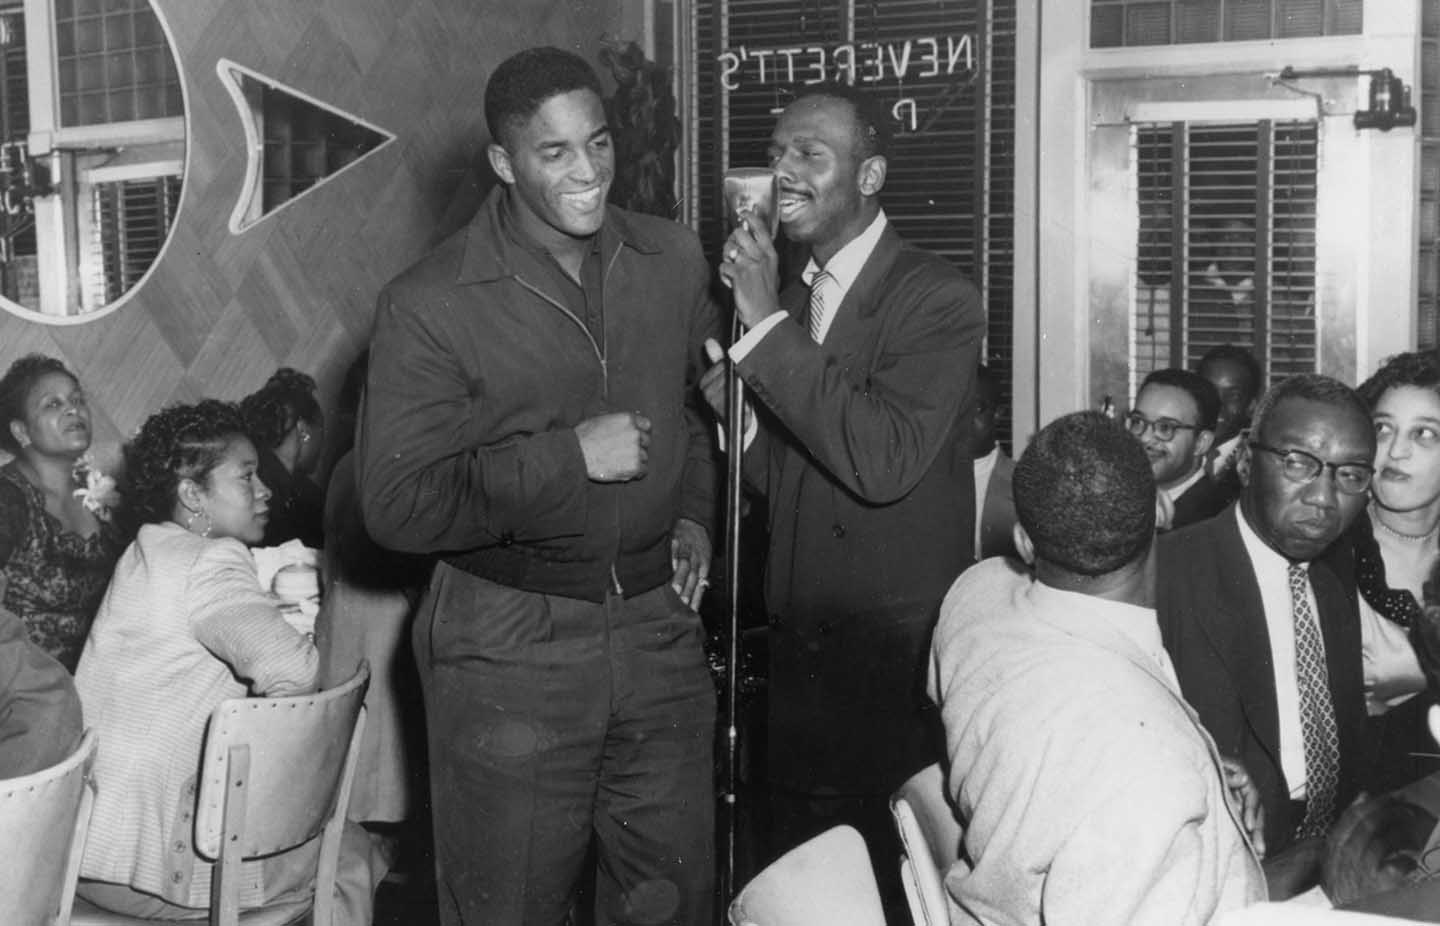 Allen Knight and Joe Black perform at Neverett’s Cafe around 1955. (The Valentine)